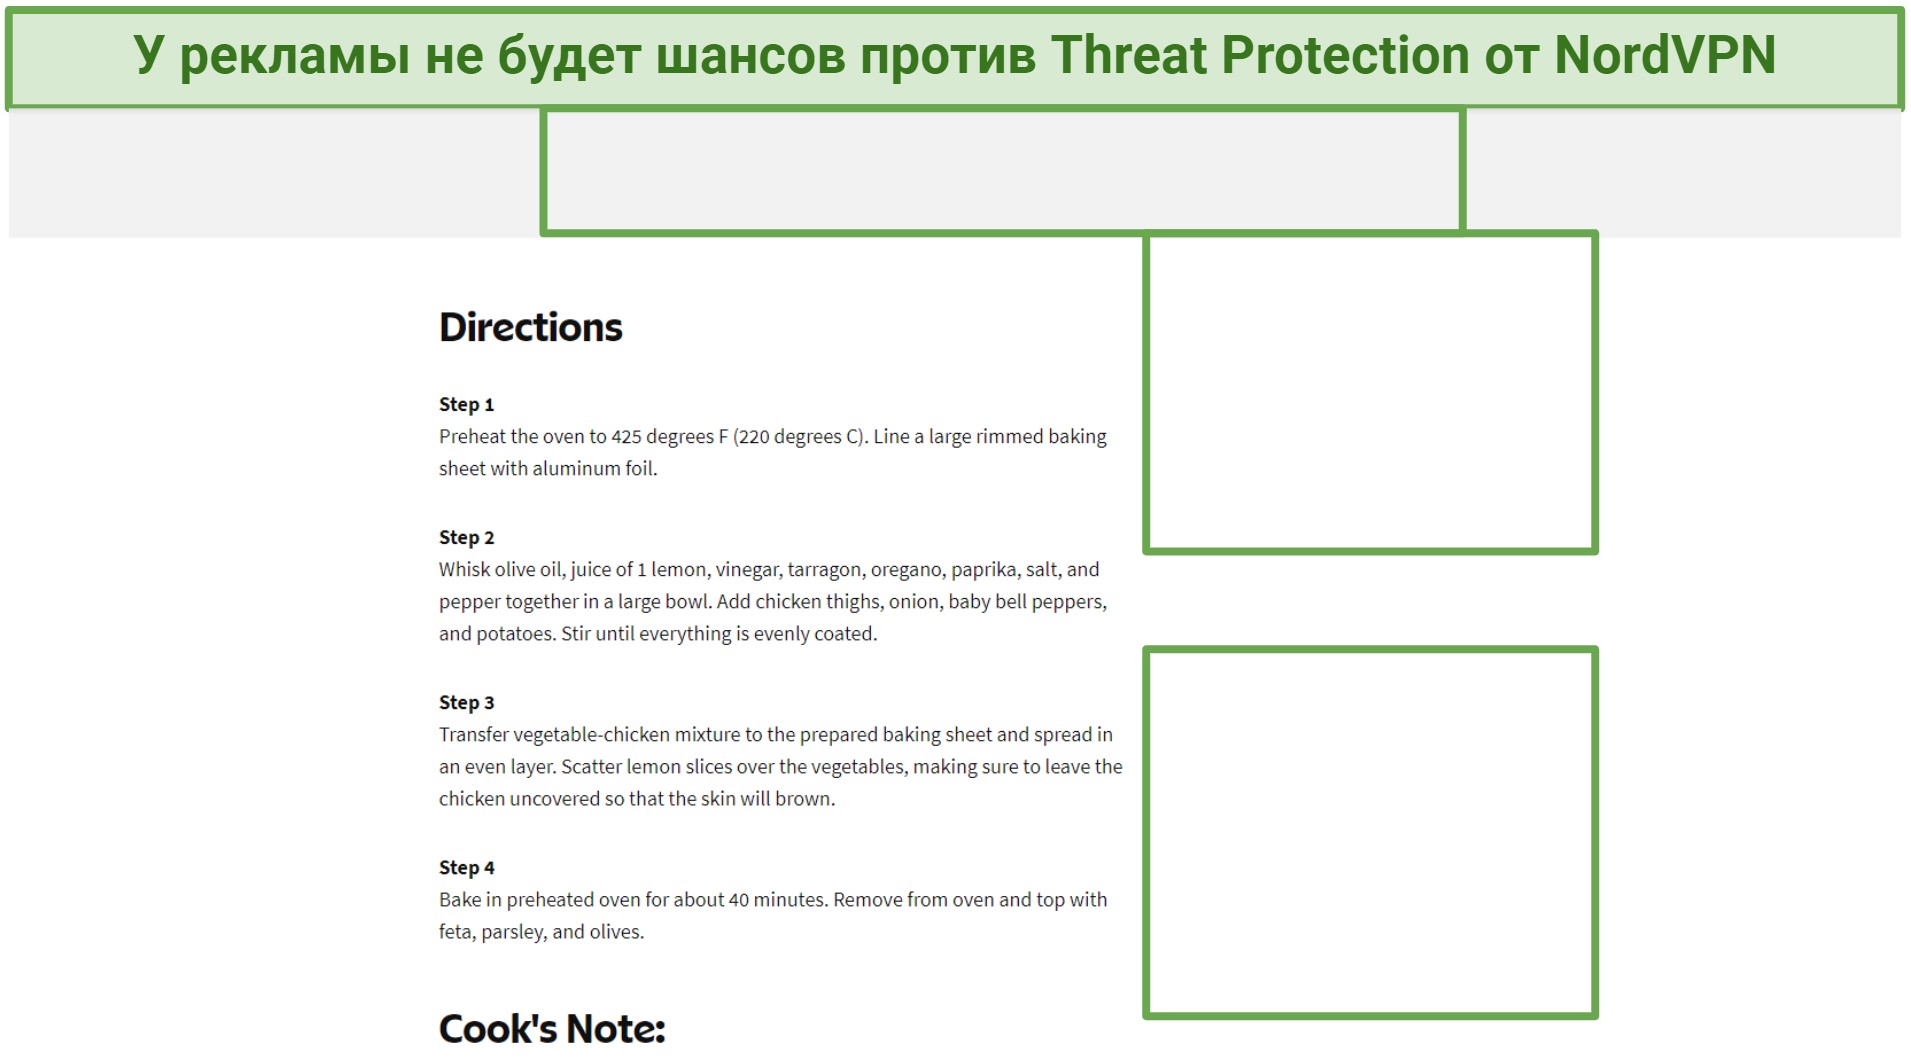 nord-vpn-threat-protection-RU